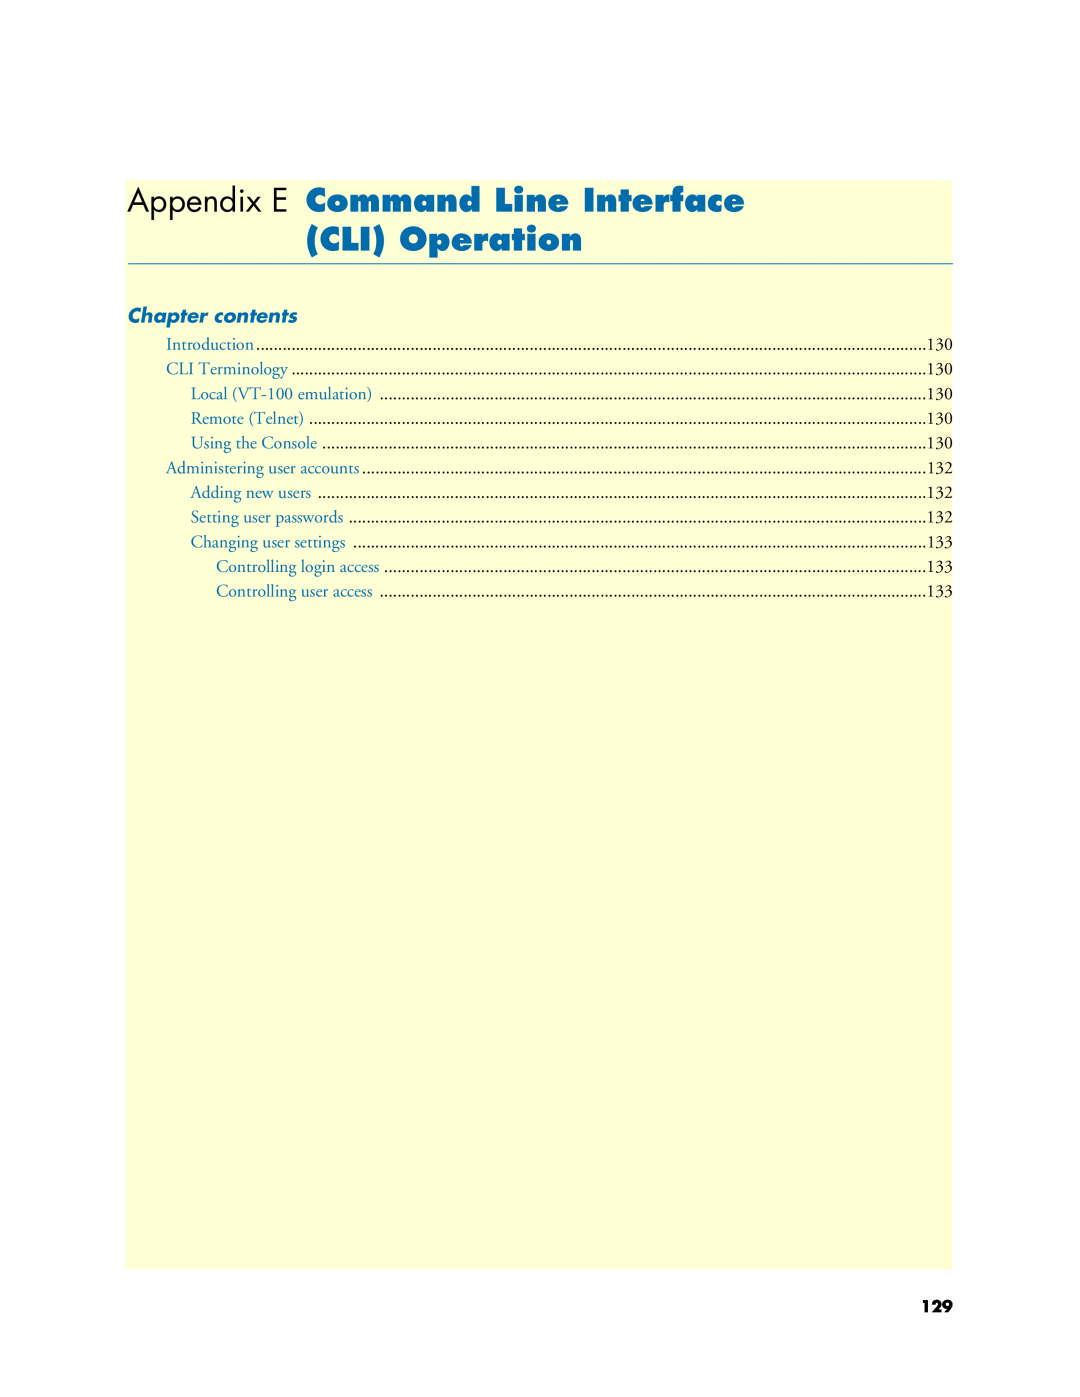 Patton electronic 2635, 2621 manual Appendix E Command Line Interface, CLI Operation, Chapter contents 